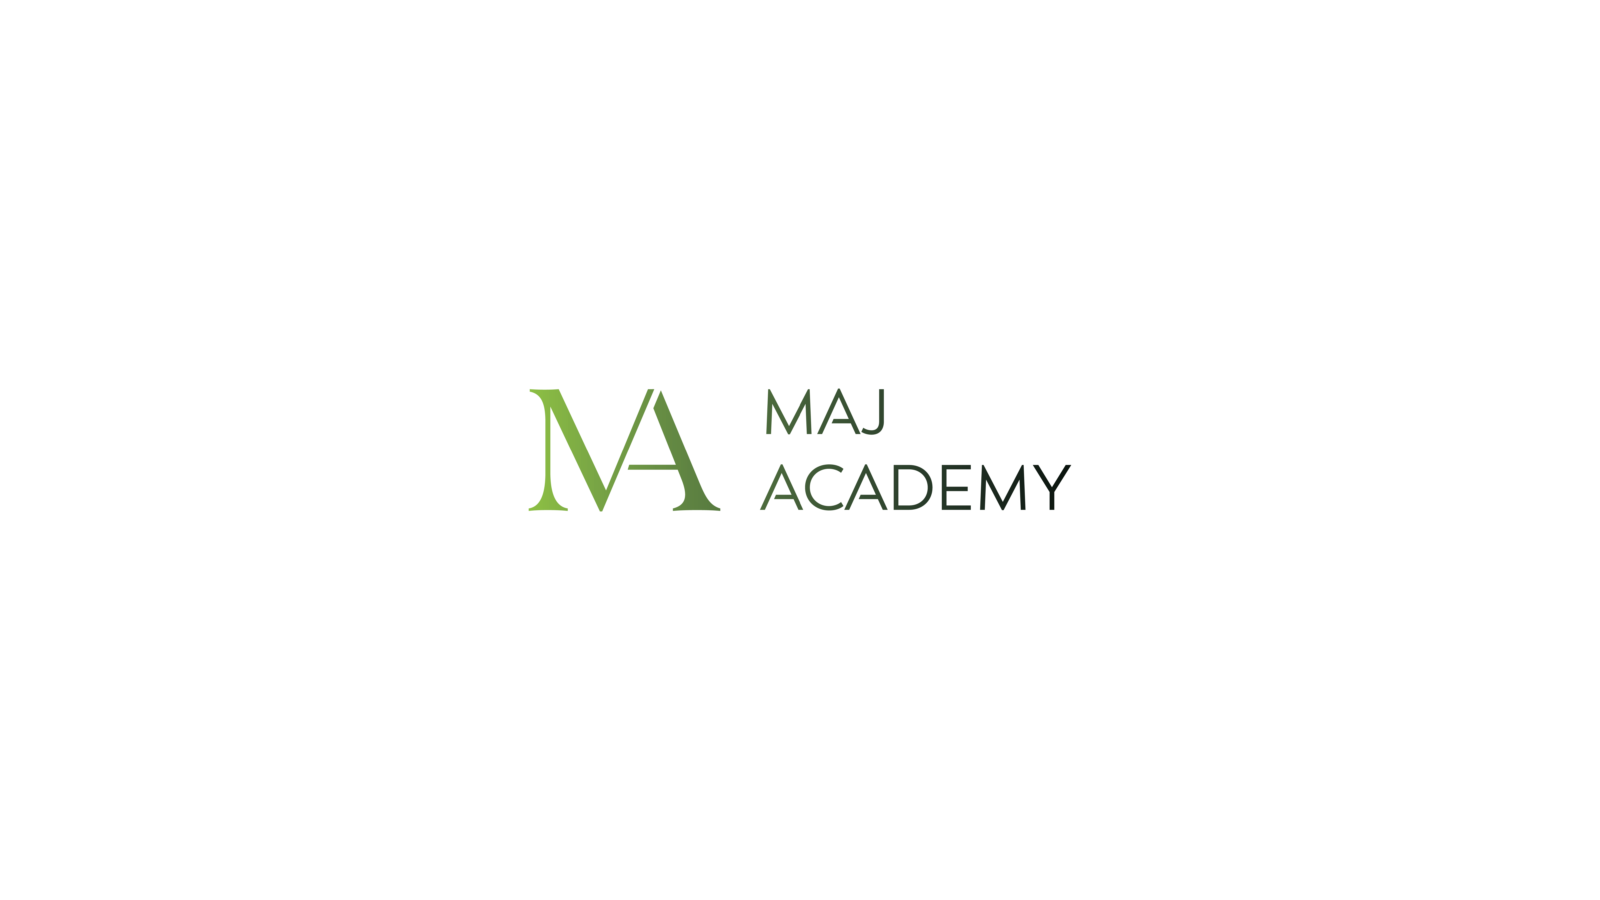 Rebranding for MajAcademy - we are refreshing the brand image!